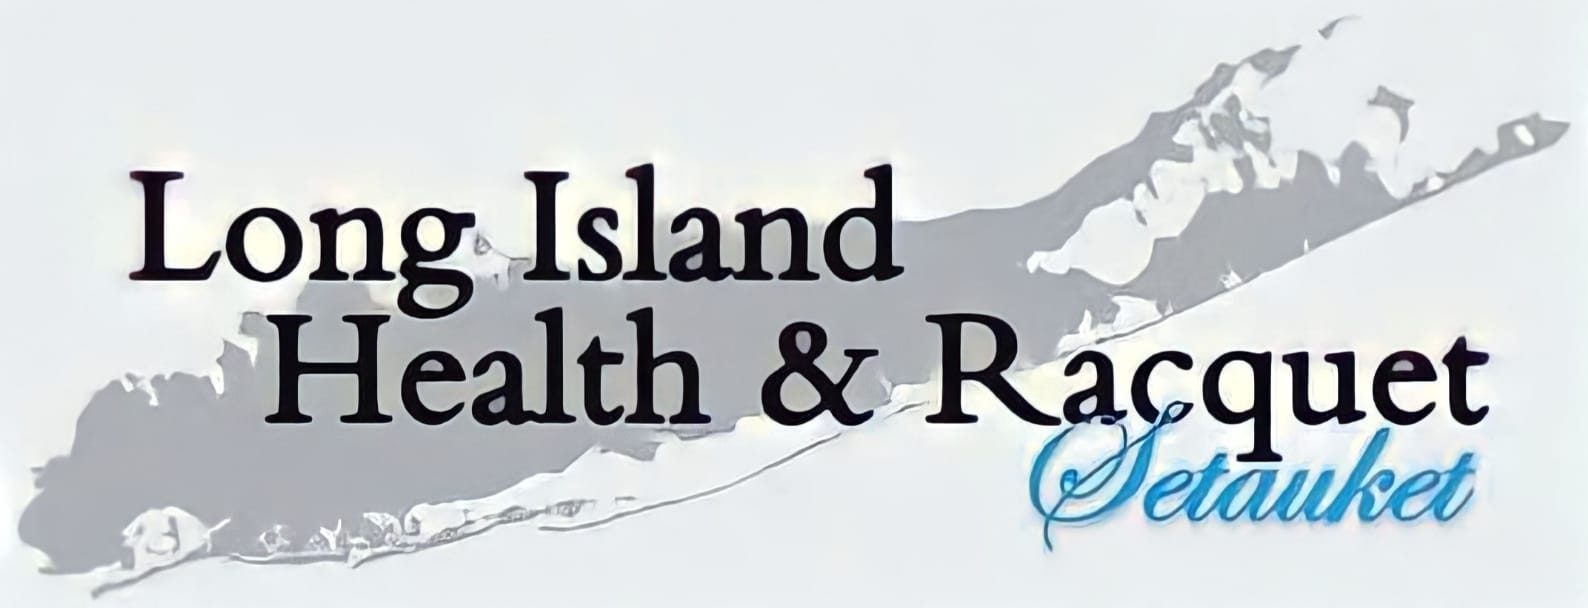 Long Island Health & Racquet Setauket